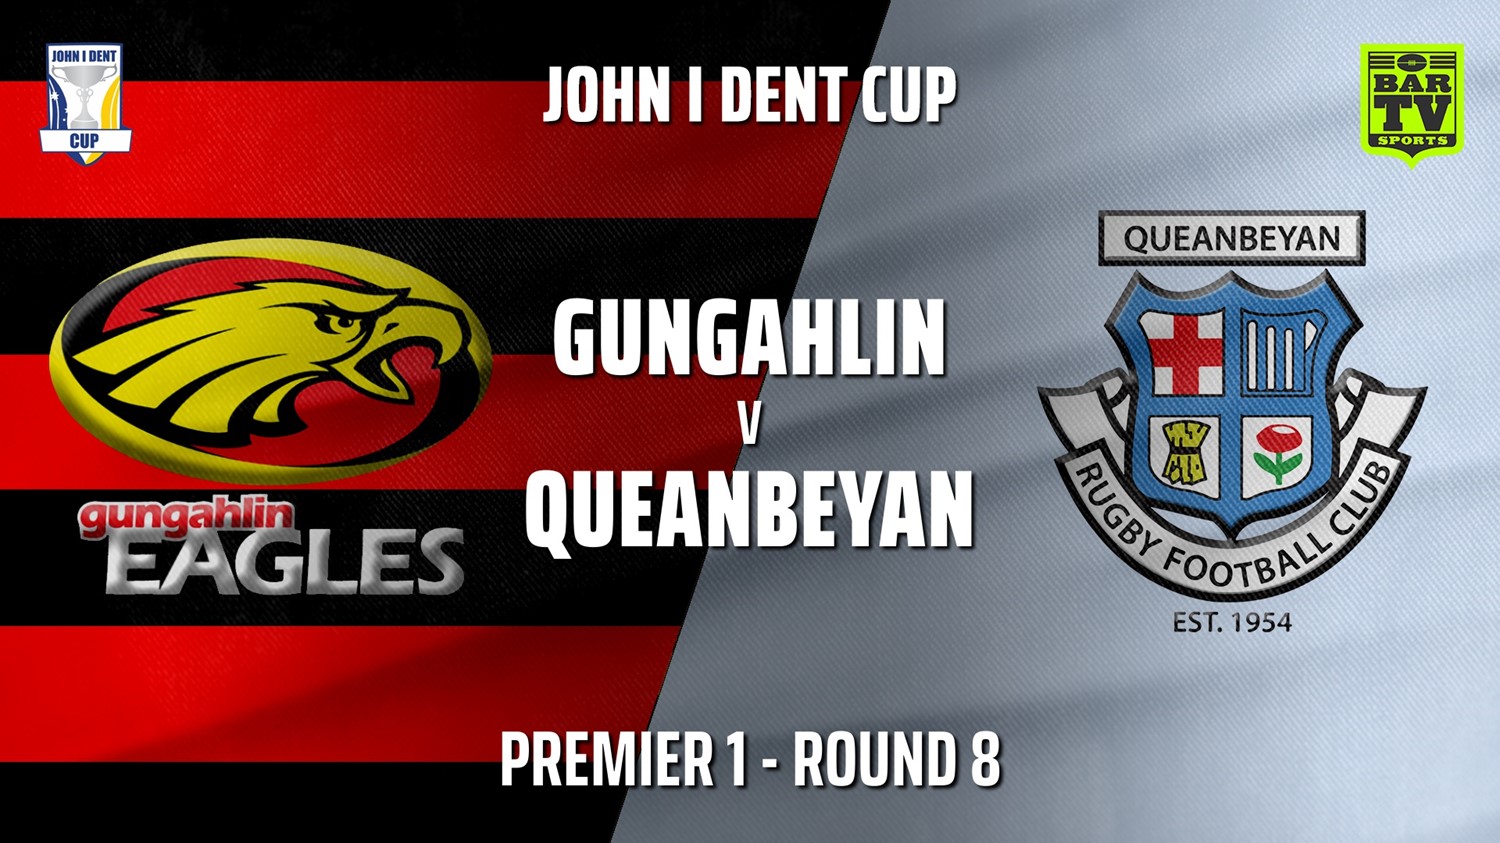 210619-John I Dent (ACT) Round 8 - Premier 1 - Gungahlin Eagles v Queanbeyan Whites Minigame Slate Image